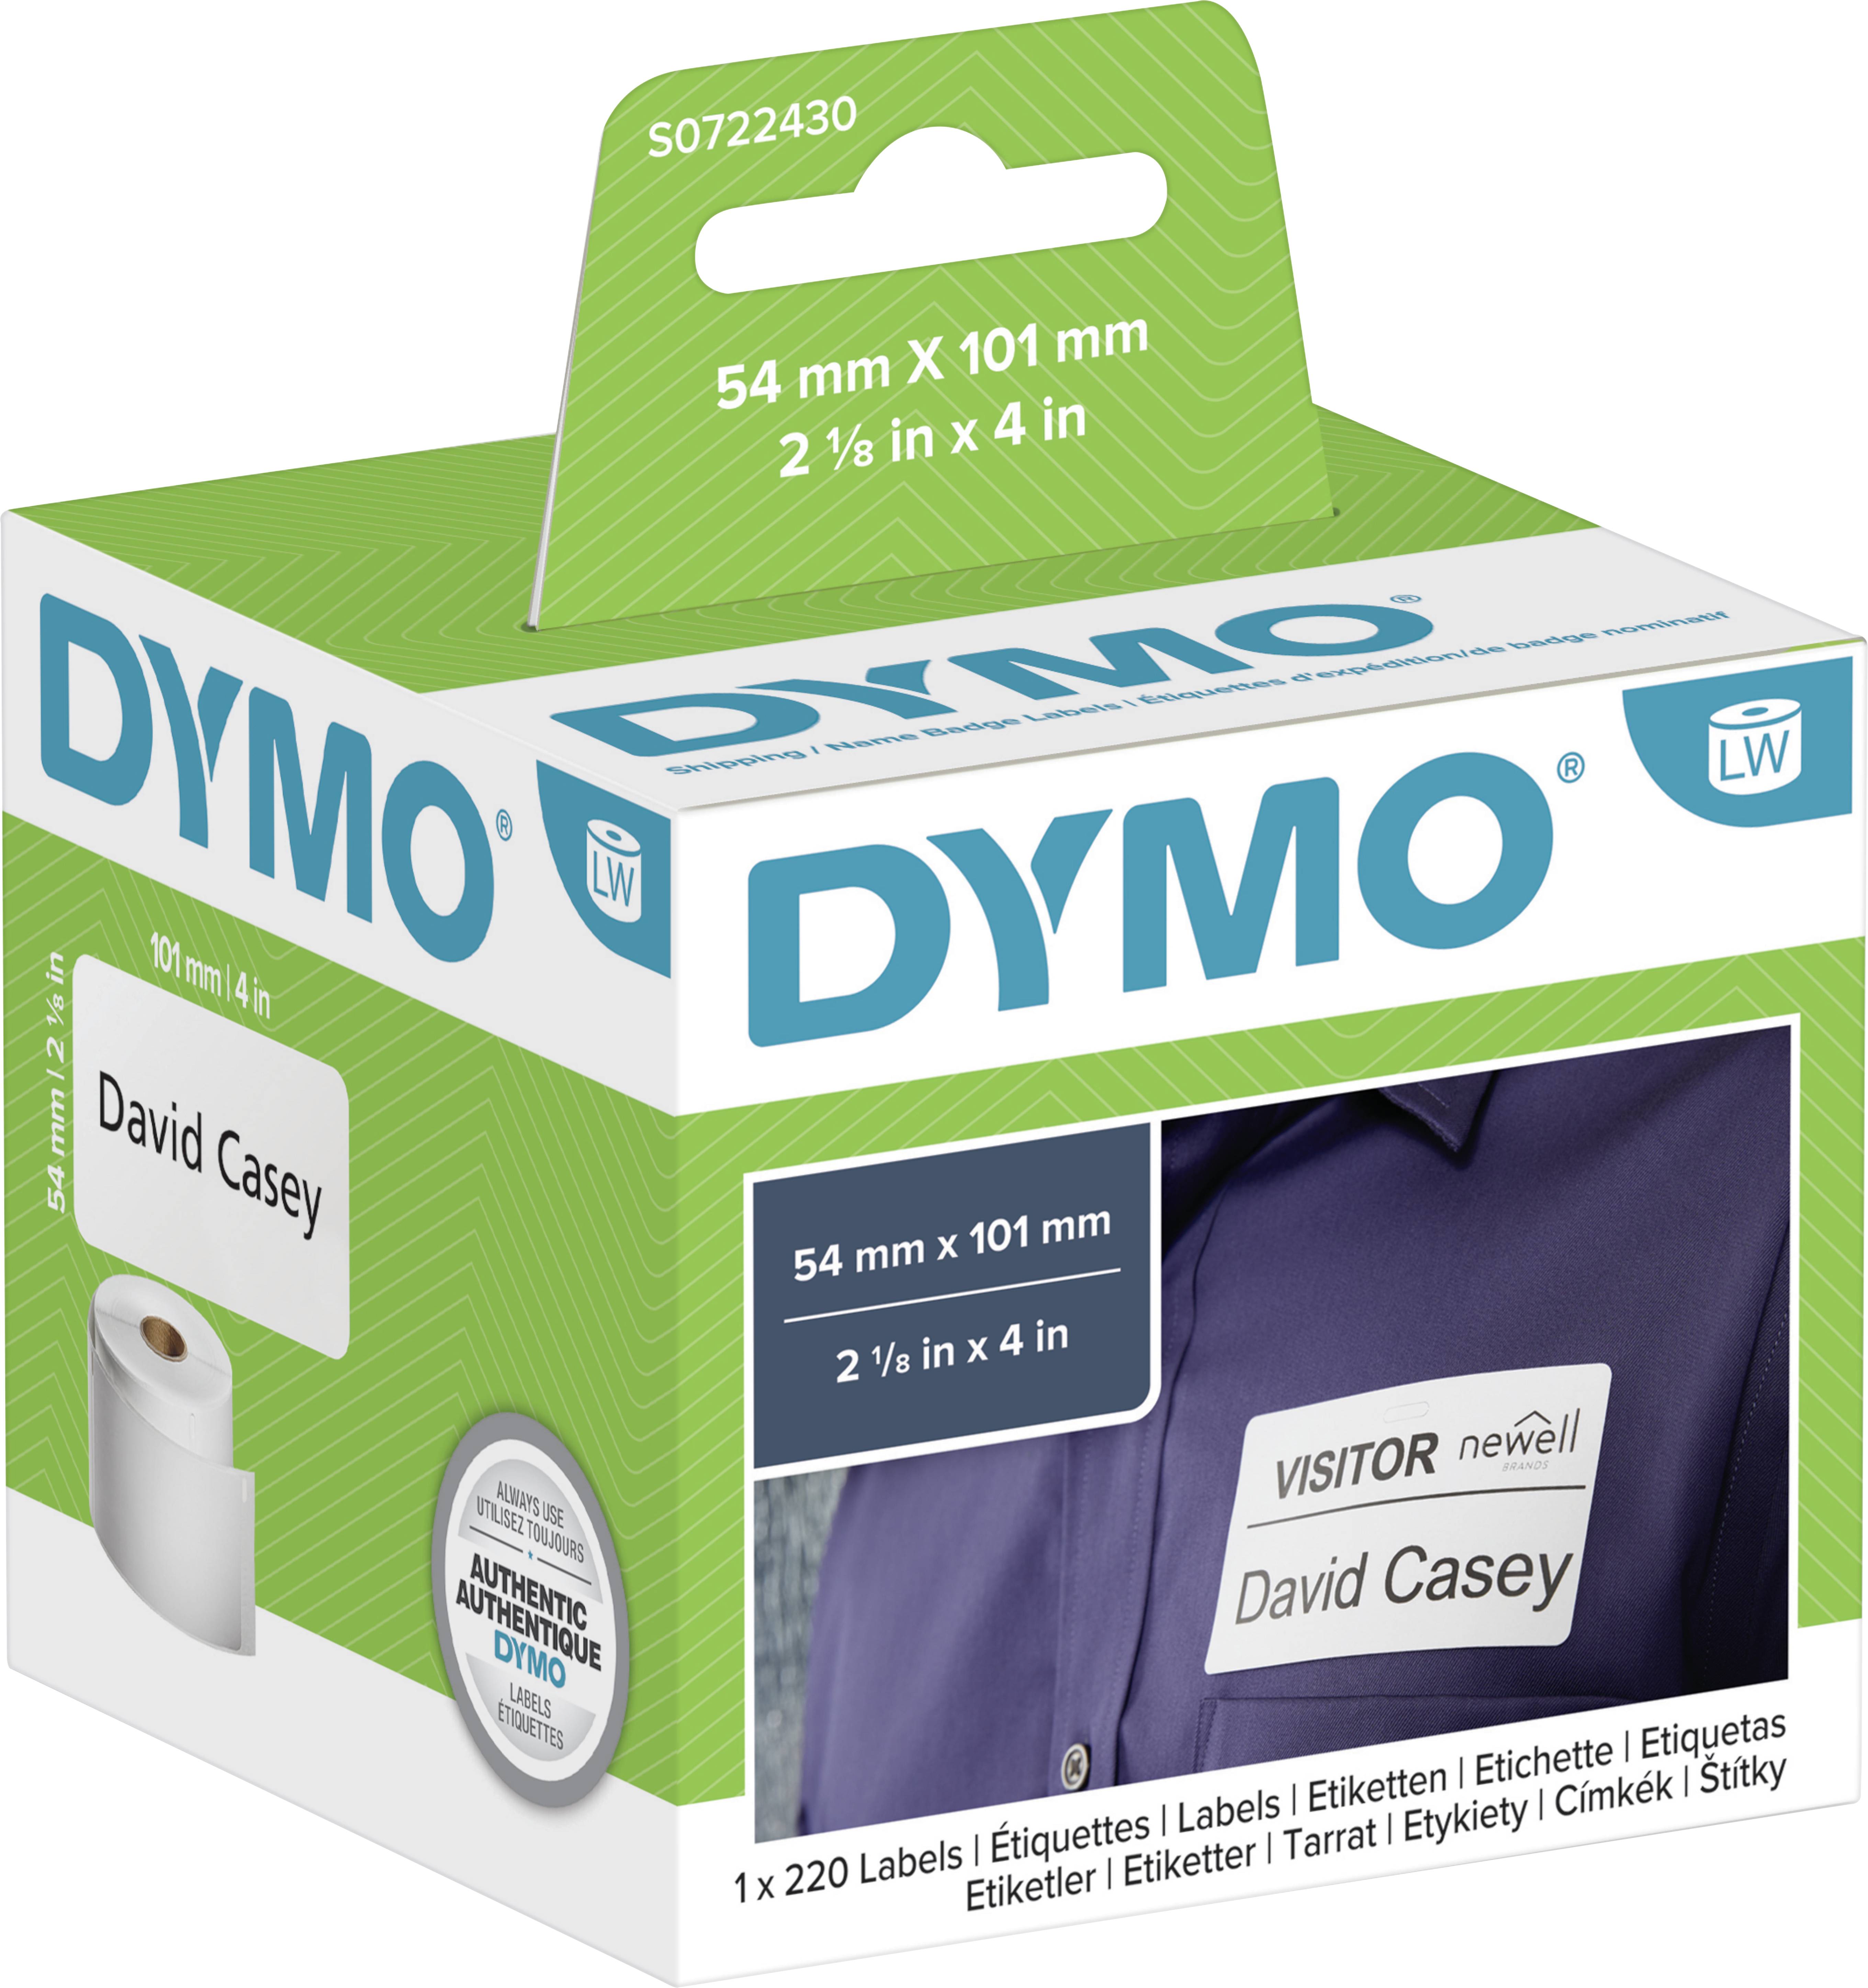 dymo label paper